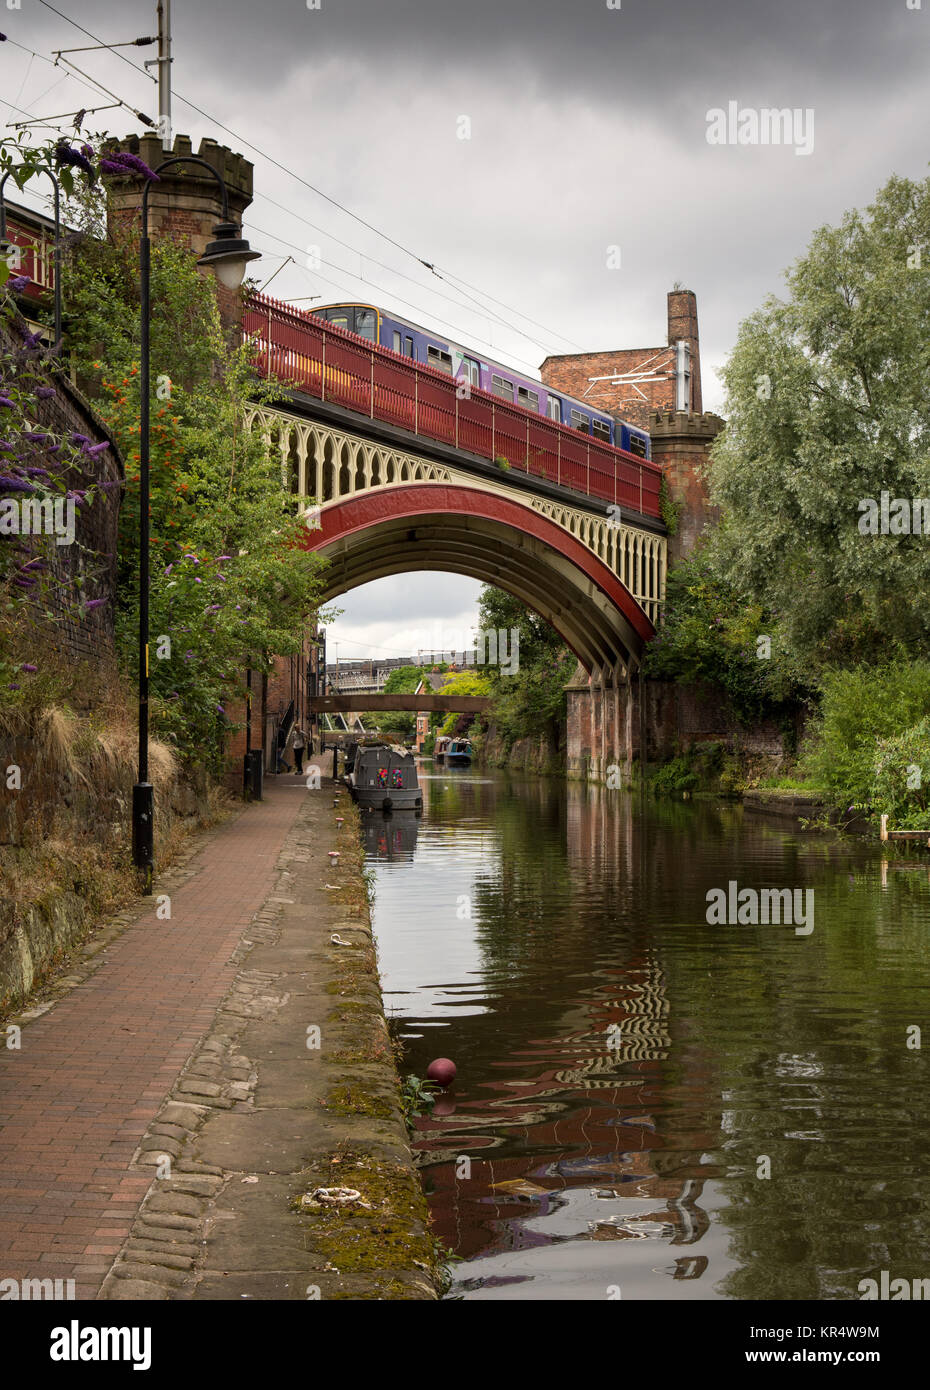 Manchester, Inglaterra, Reino Unido - Agosto 2, 2015: una clase de ferrocarril norte 150 pasajeros diesel tren cruza el Bridgewater Canal en Deansgate en Manch central Foto de stock